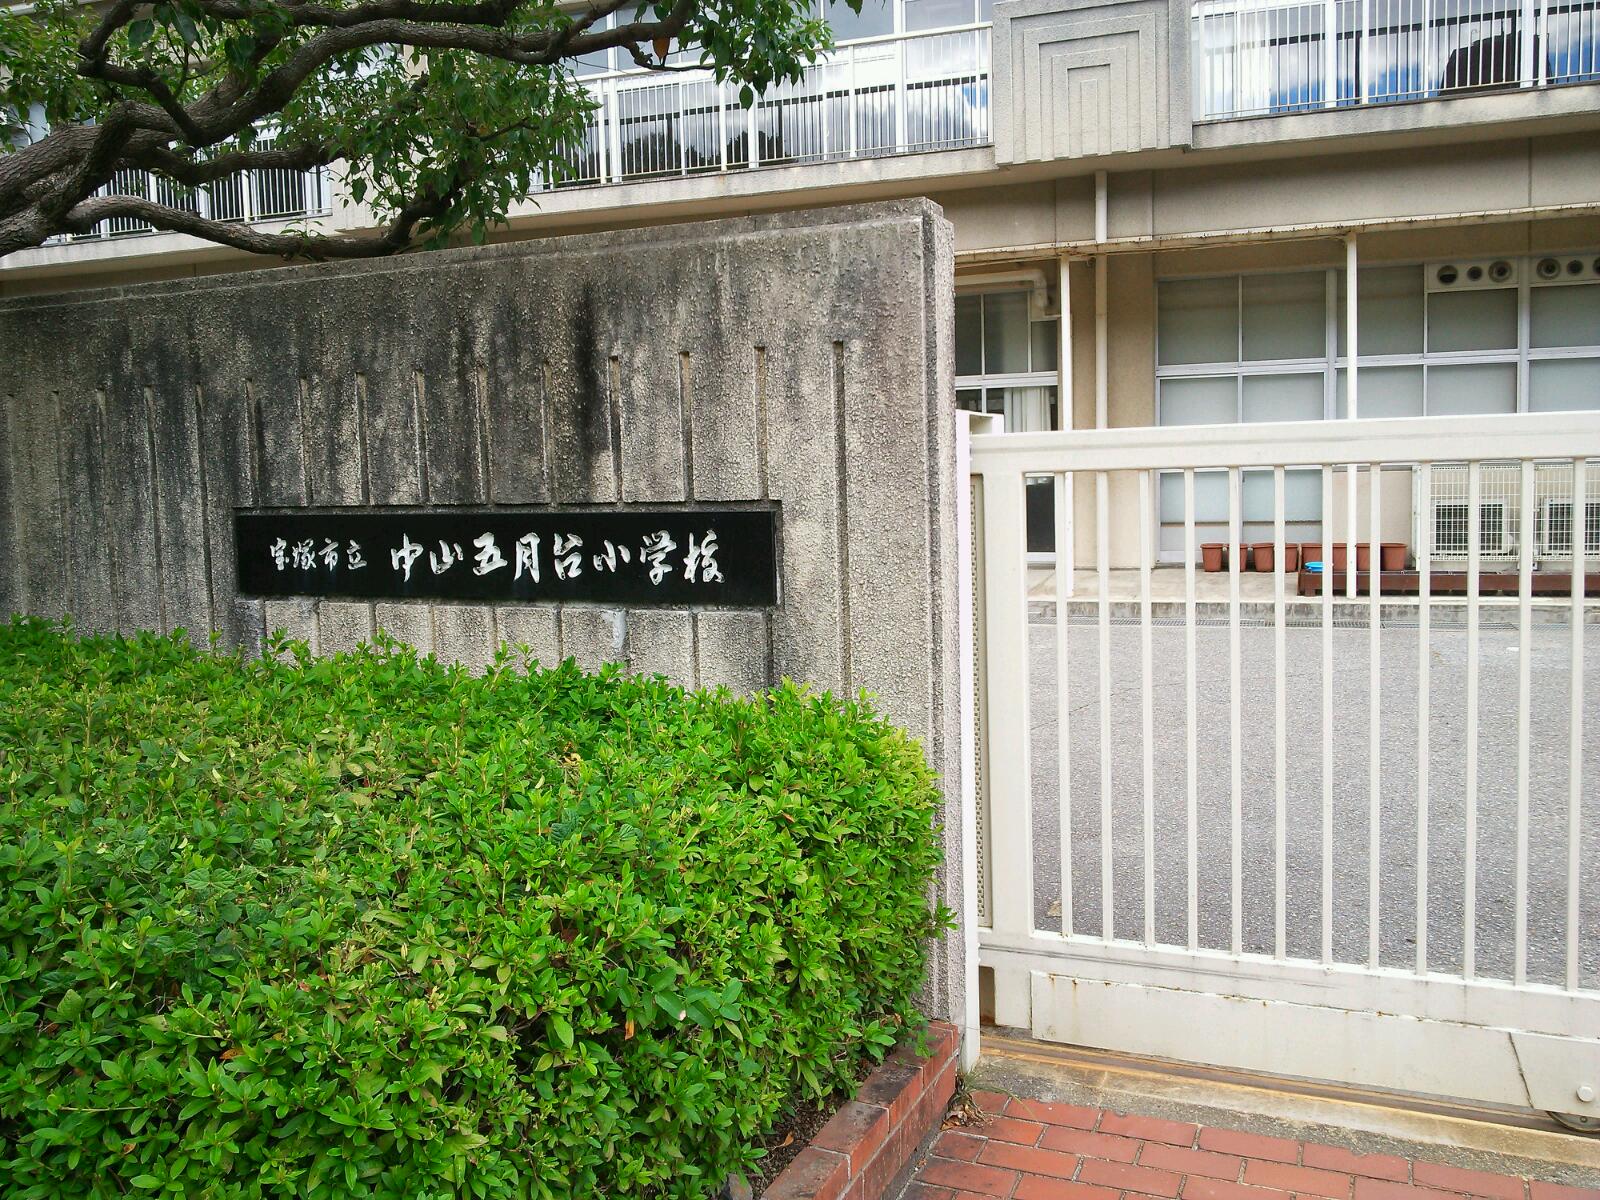 Primary school. Takarazuka City Nakayamasatsukidai to elementary school (elementary school) 1050m